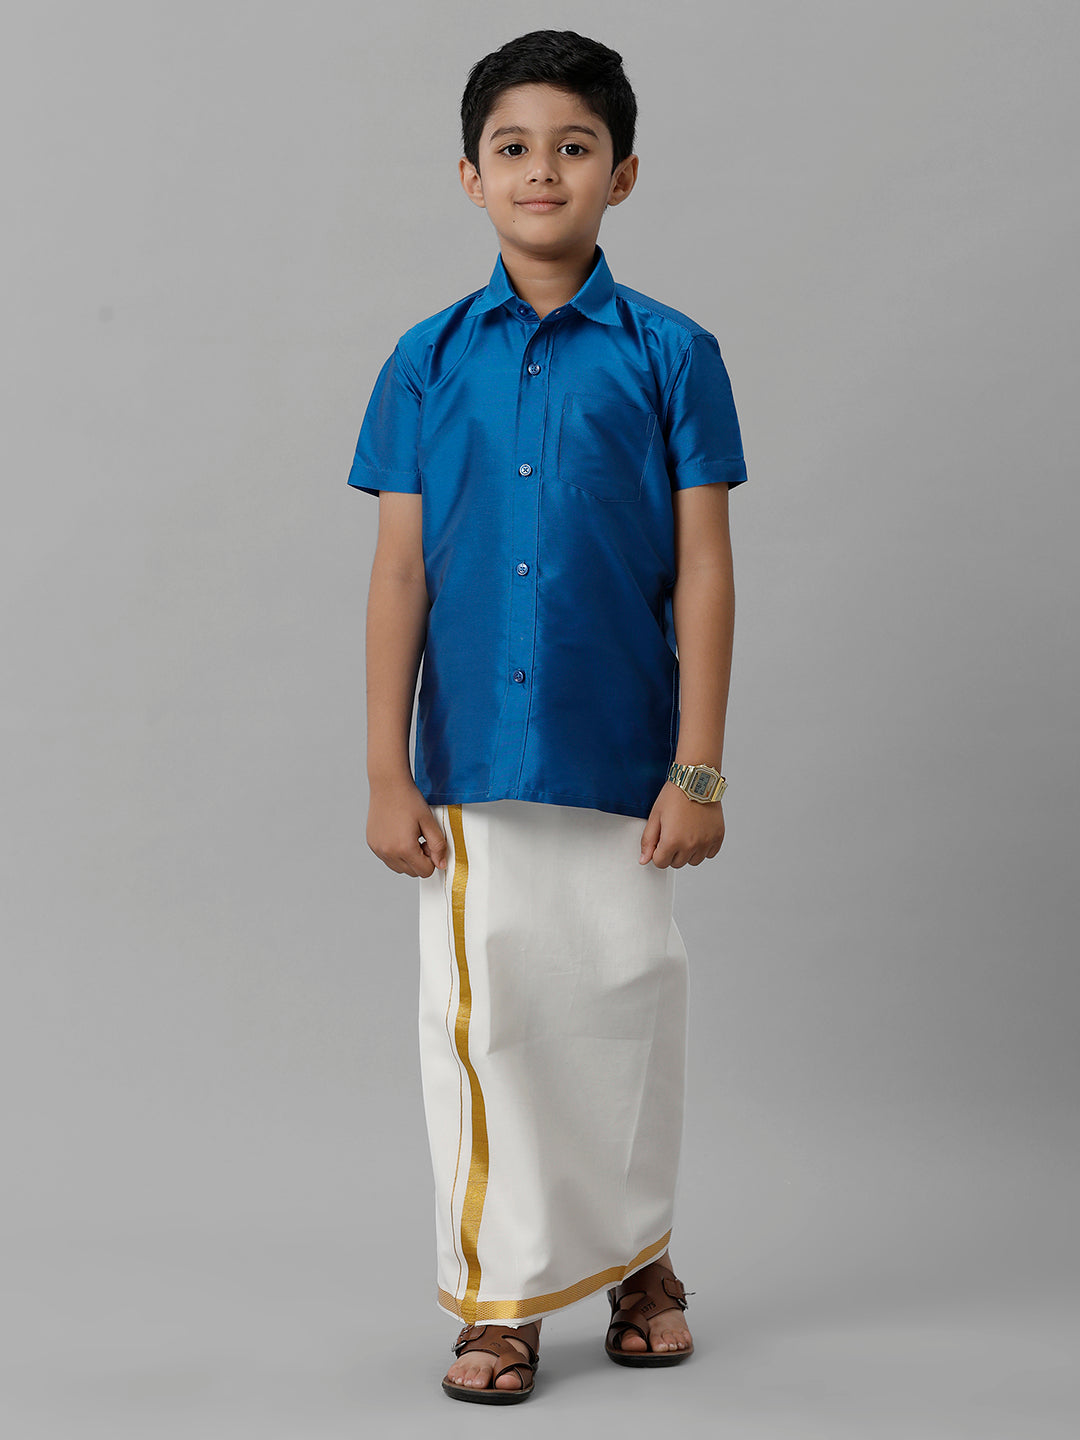 Boys Silk Cotton Shirt with Dhoti Set Royal Blue